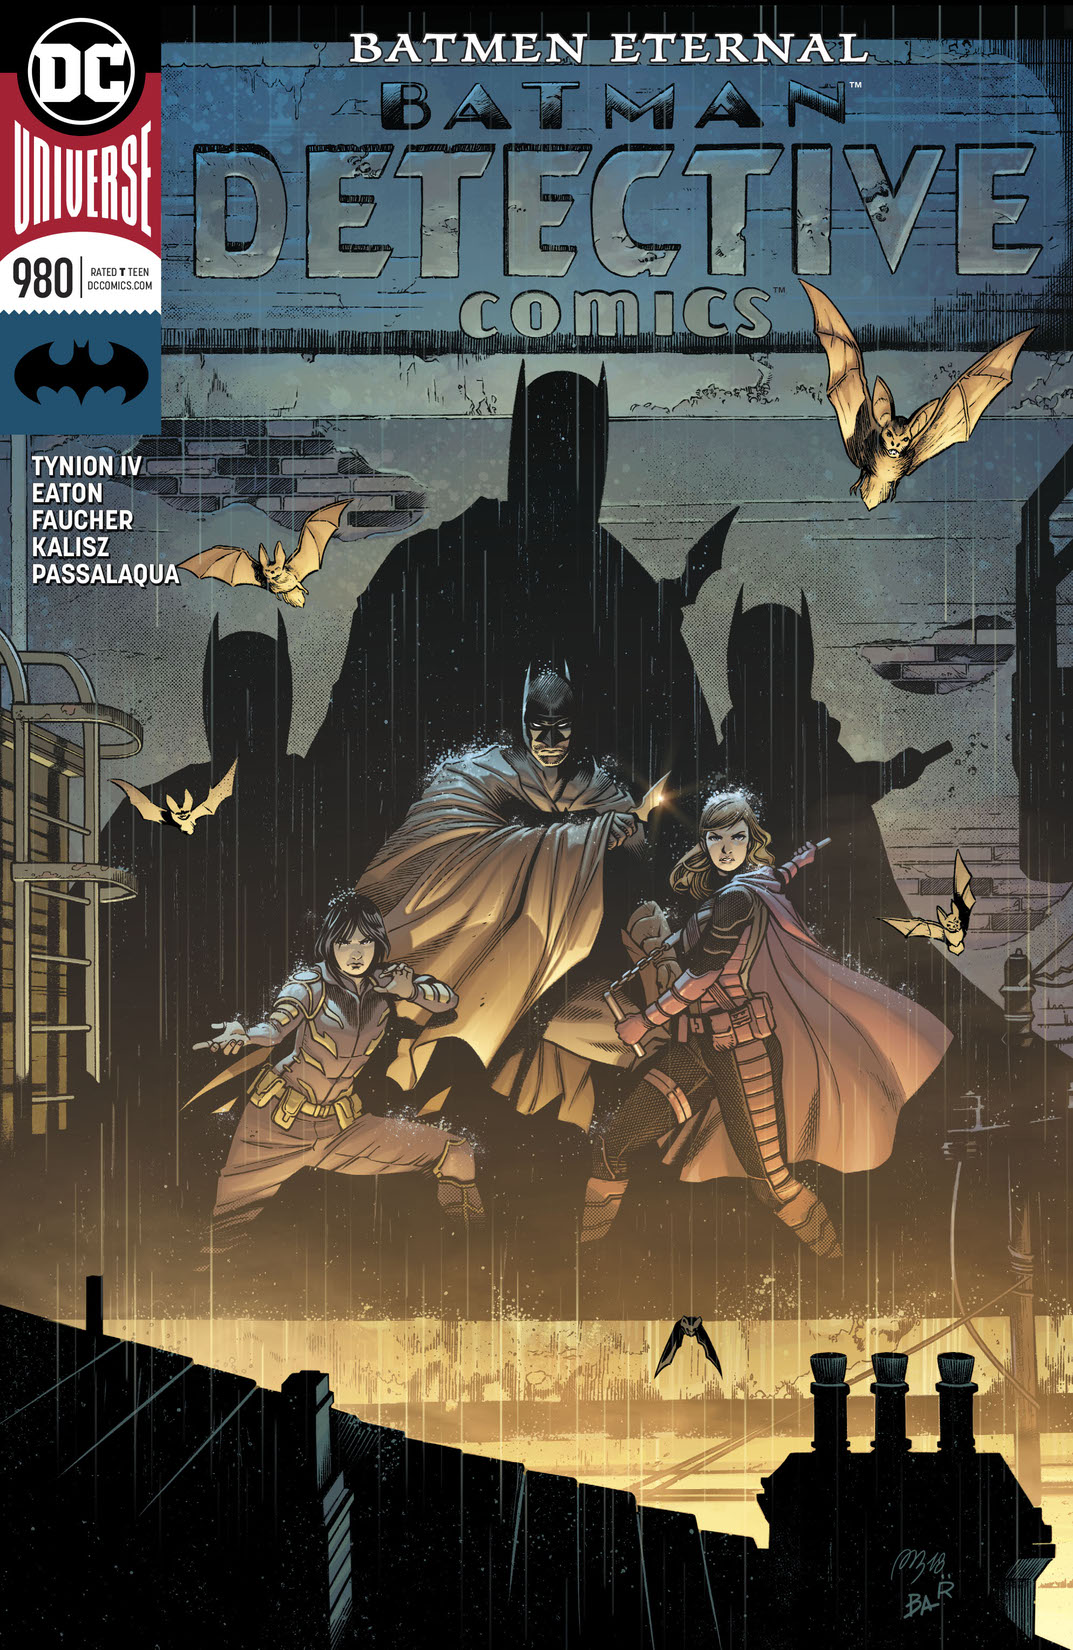 Detective Comics (2016-) #980 preview images